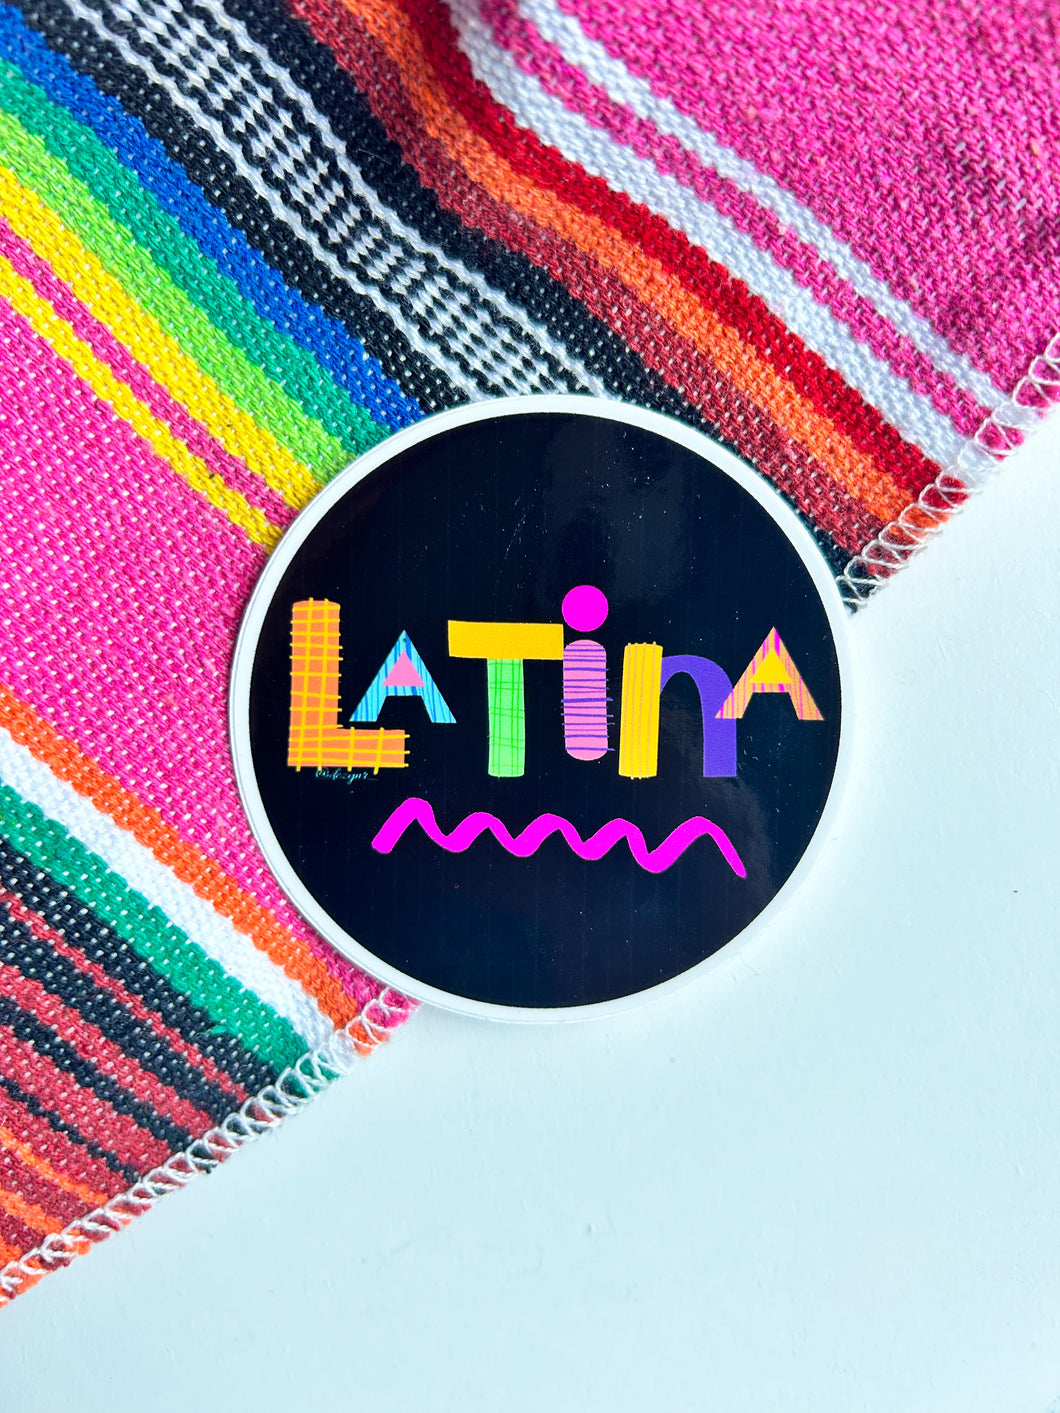 Latina sticker